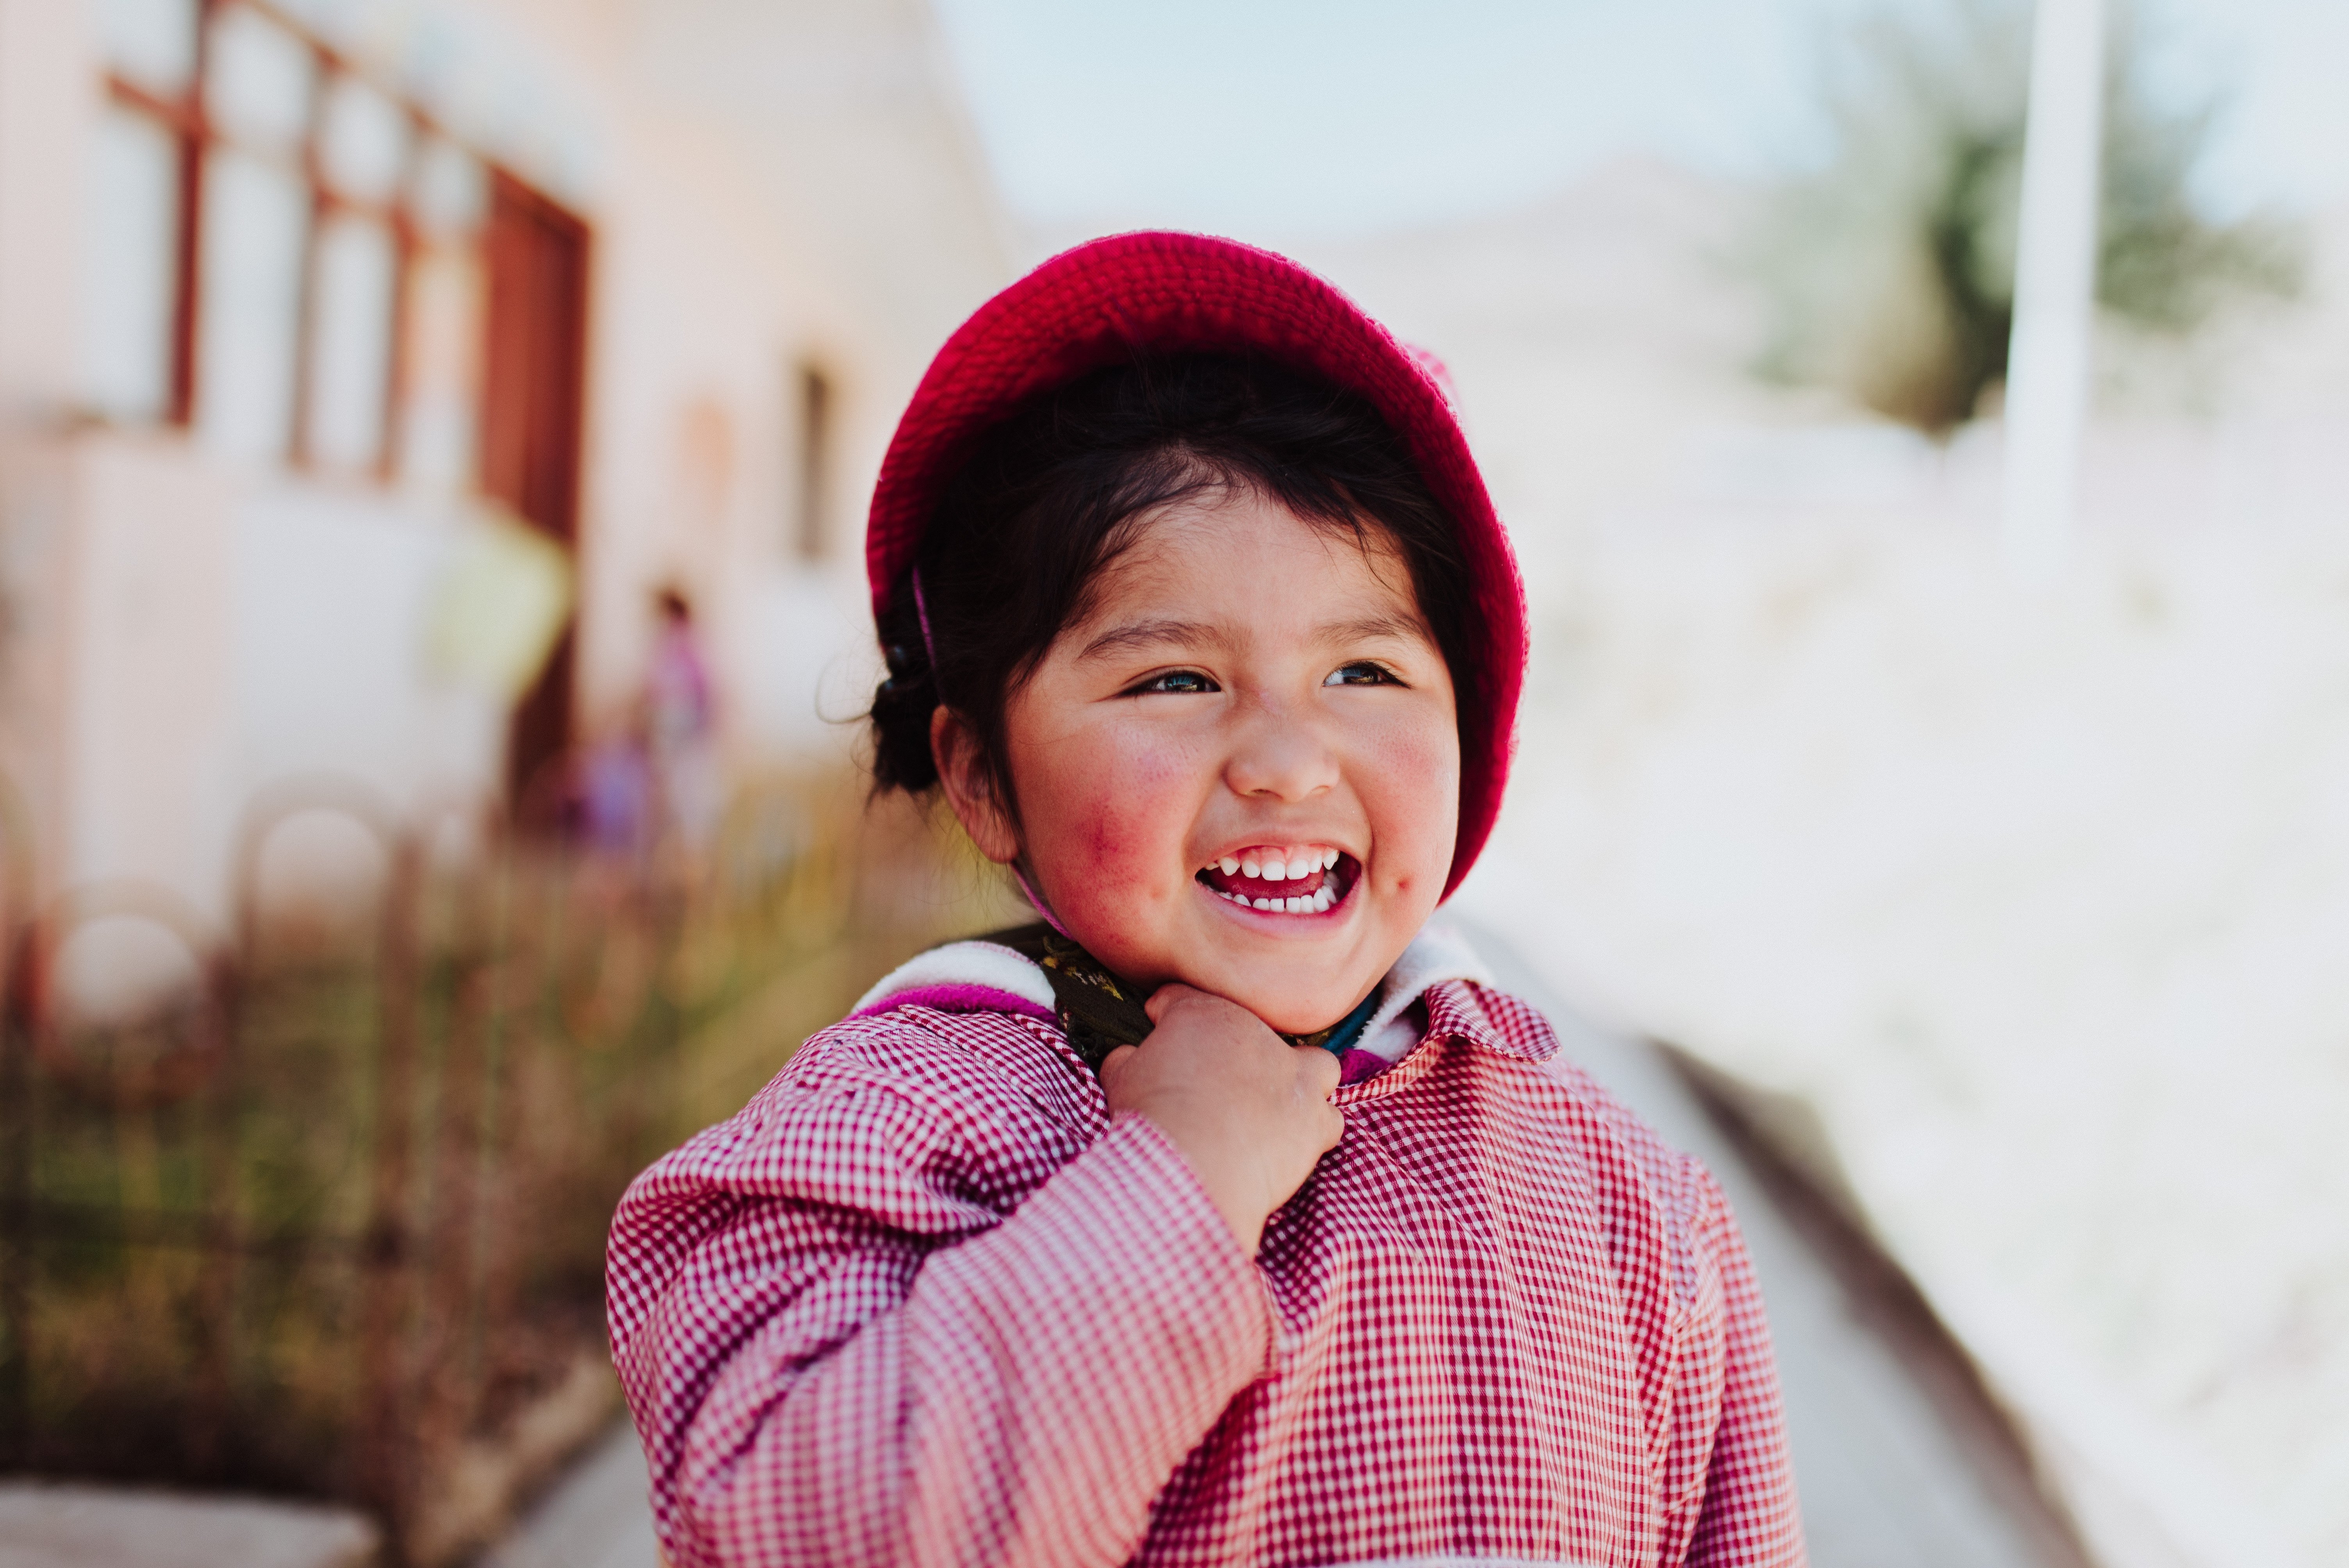 A little girl smiling. | Source: Unsplash